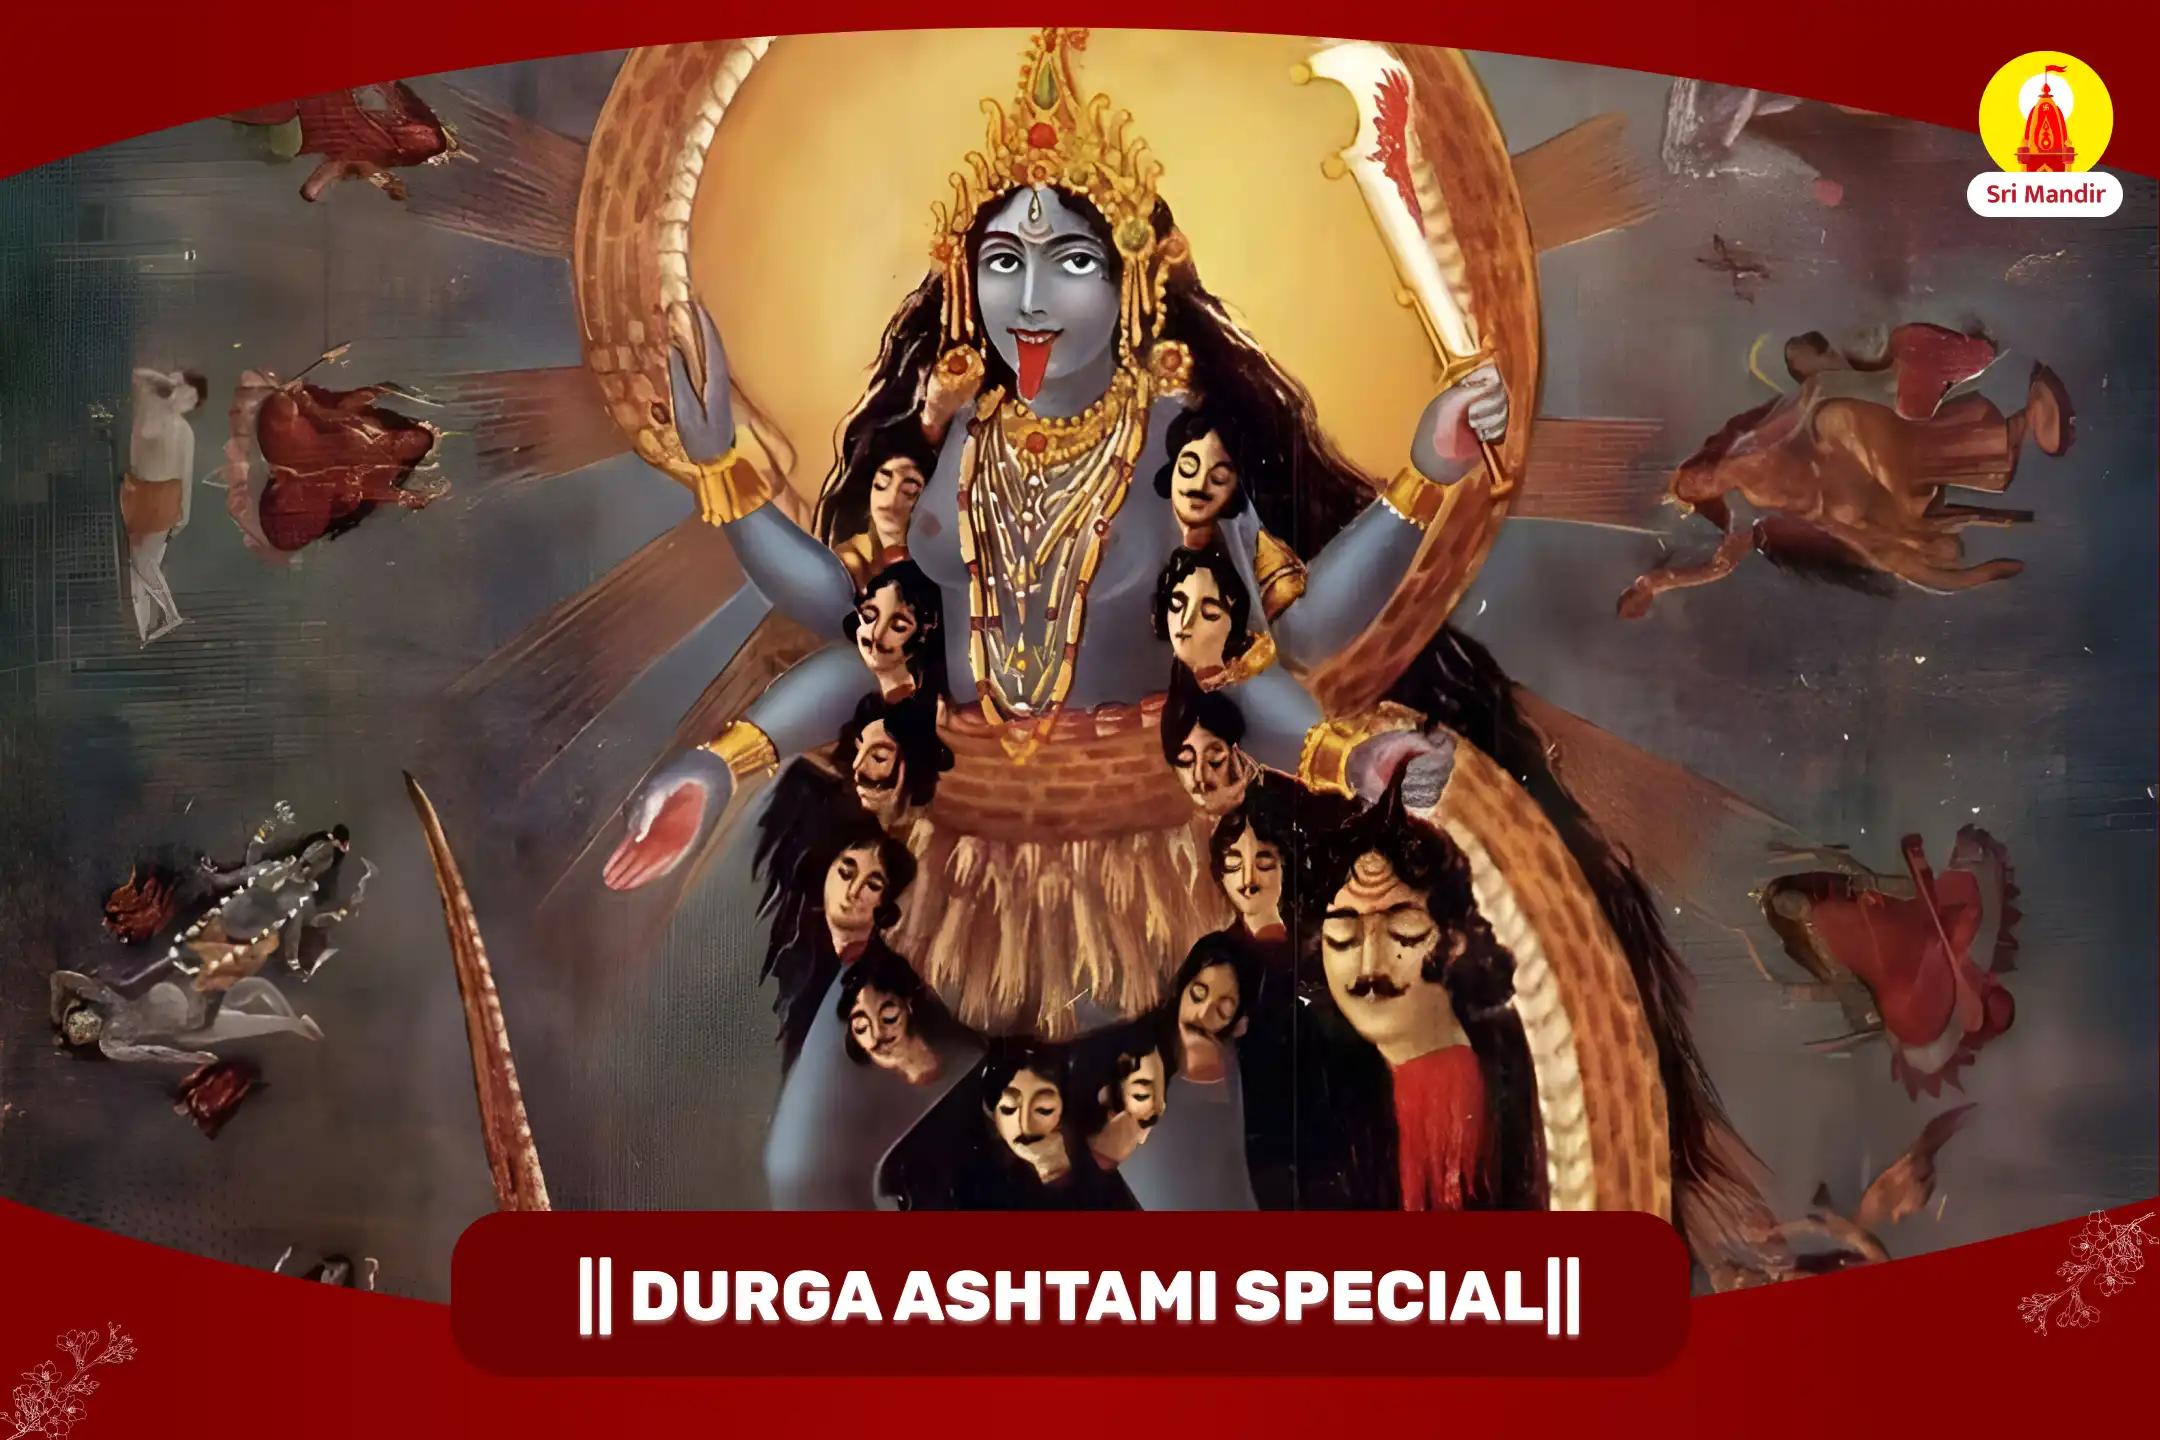 Durga Ashtami Special Mahakali Tantrokta Mahapuja for Seeking Courage, Fearlessness and to Restore Authority